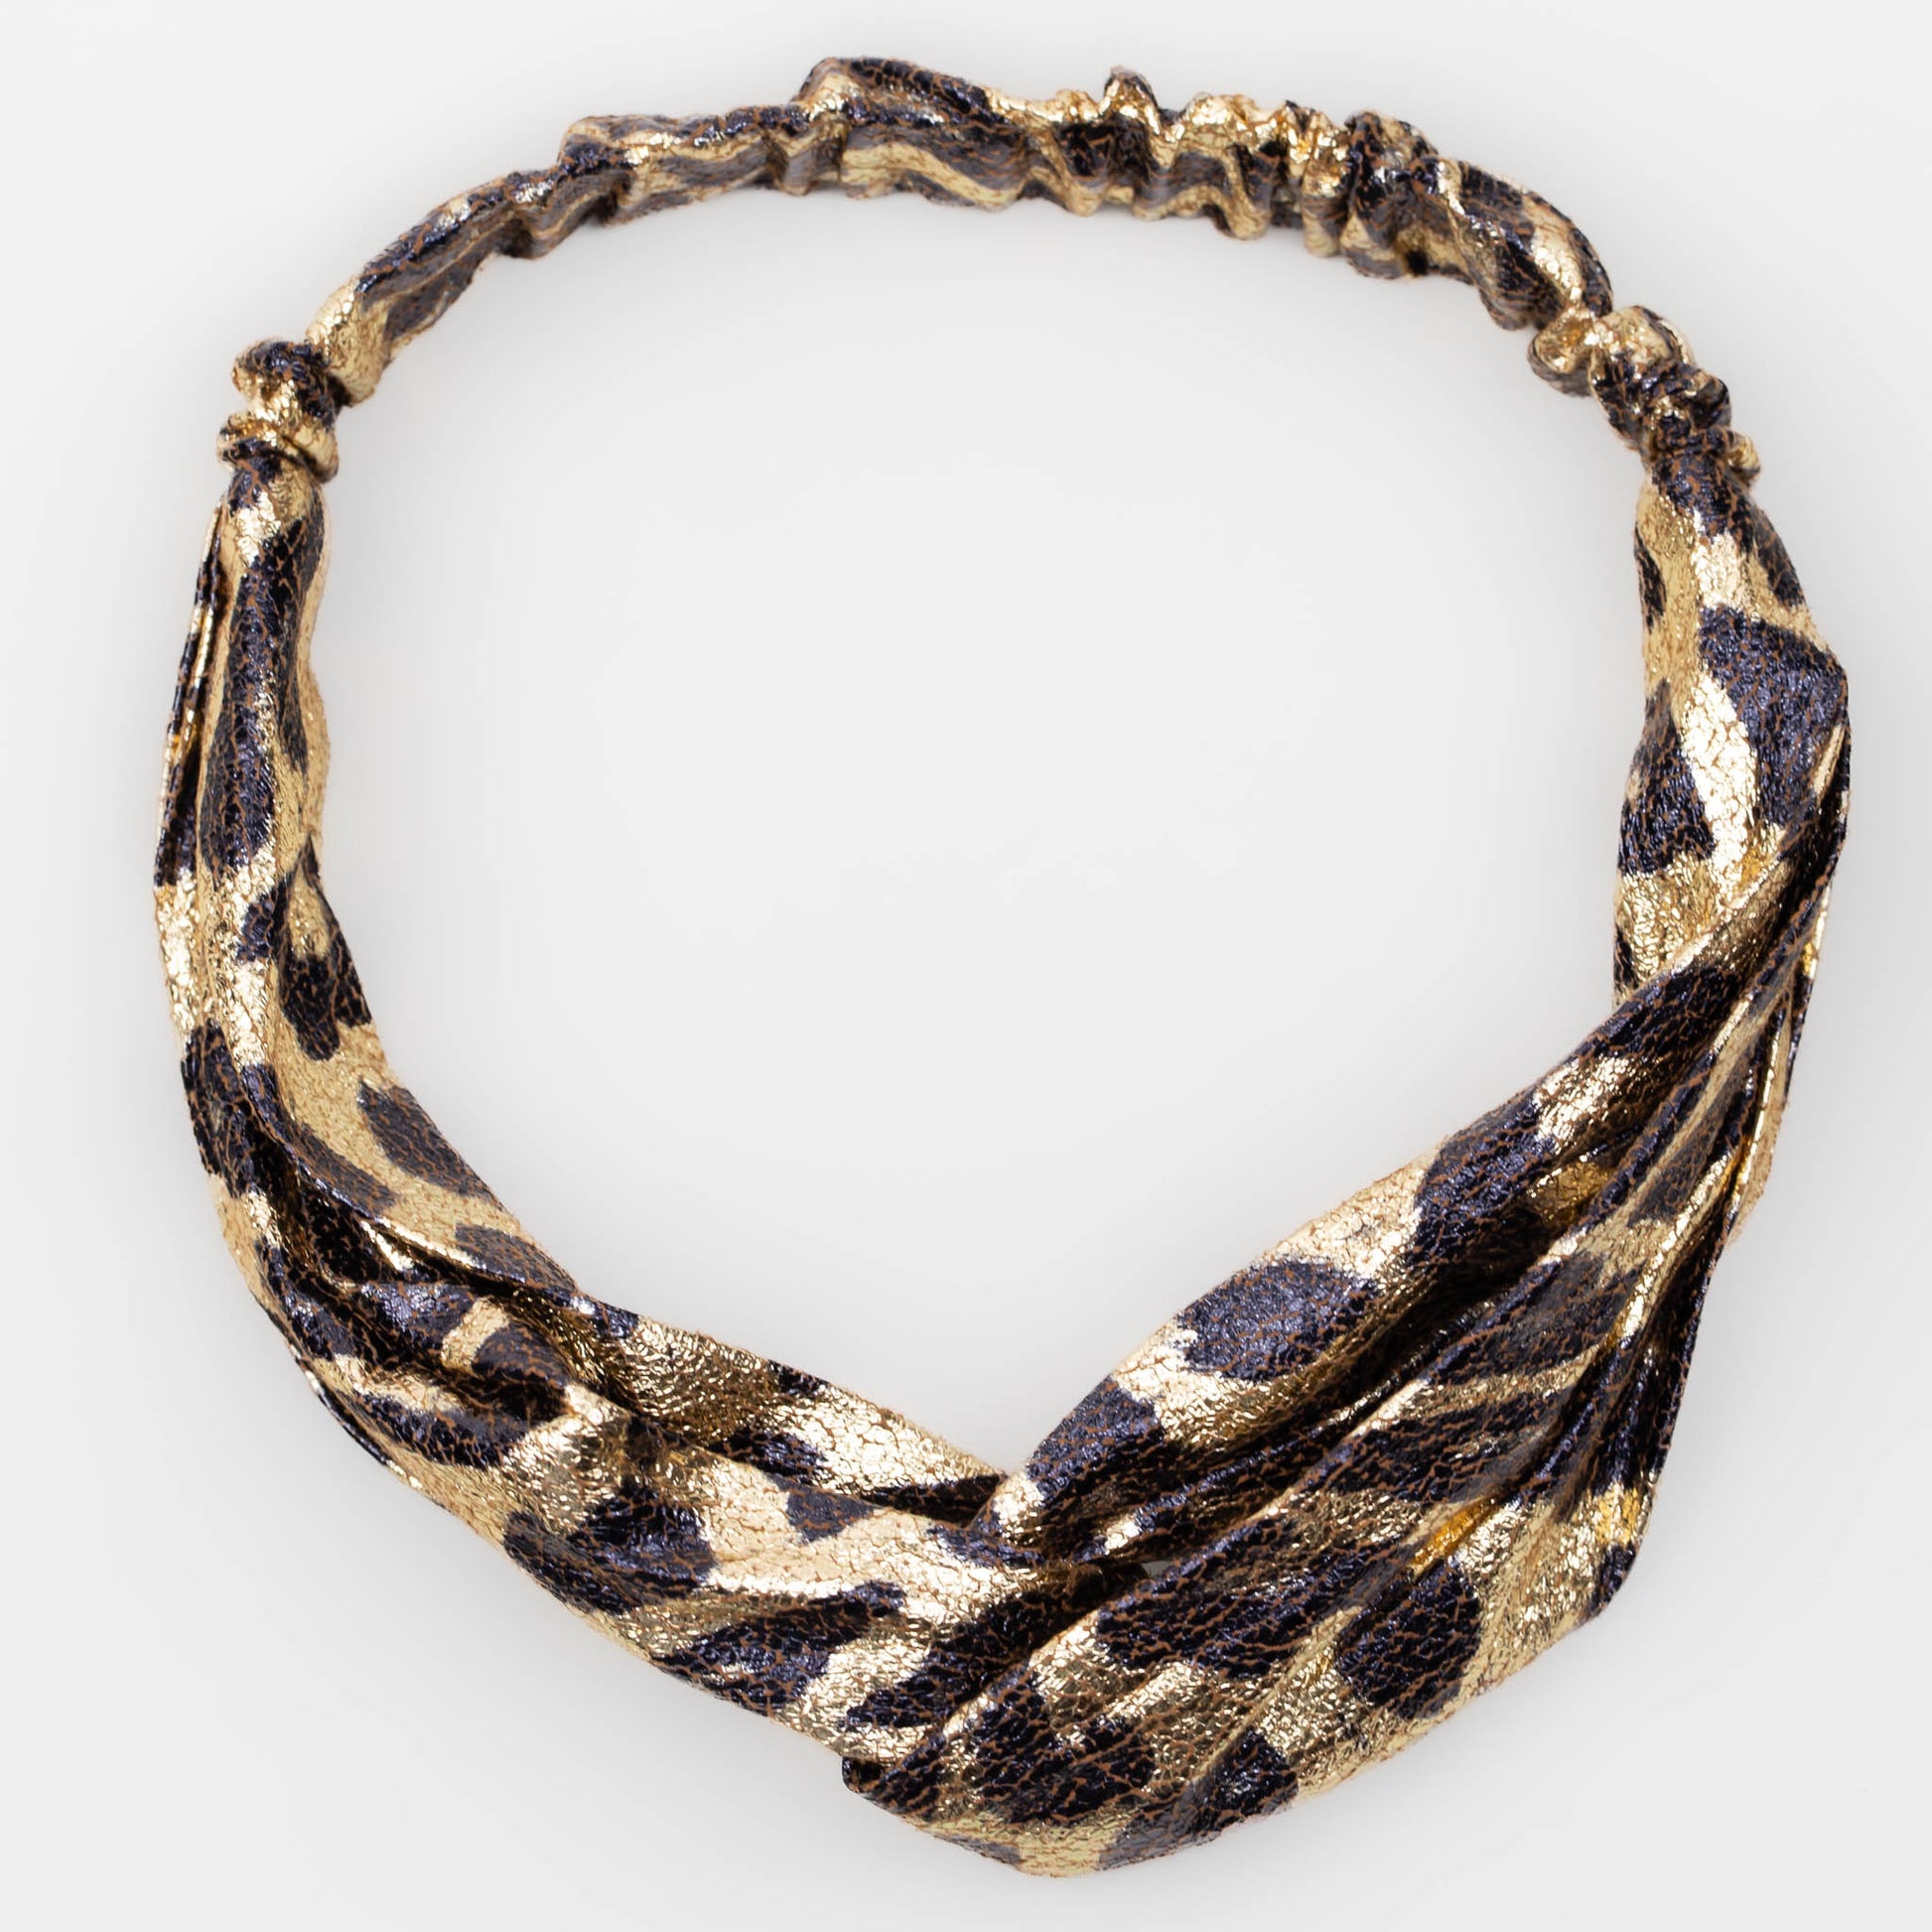 Bentiță de păr cu nod tip turban și material texturat animal print - Auriu